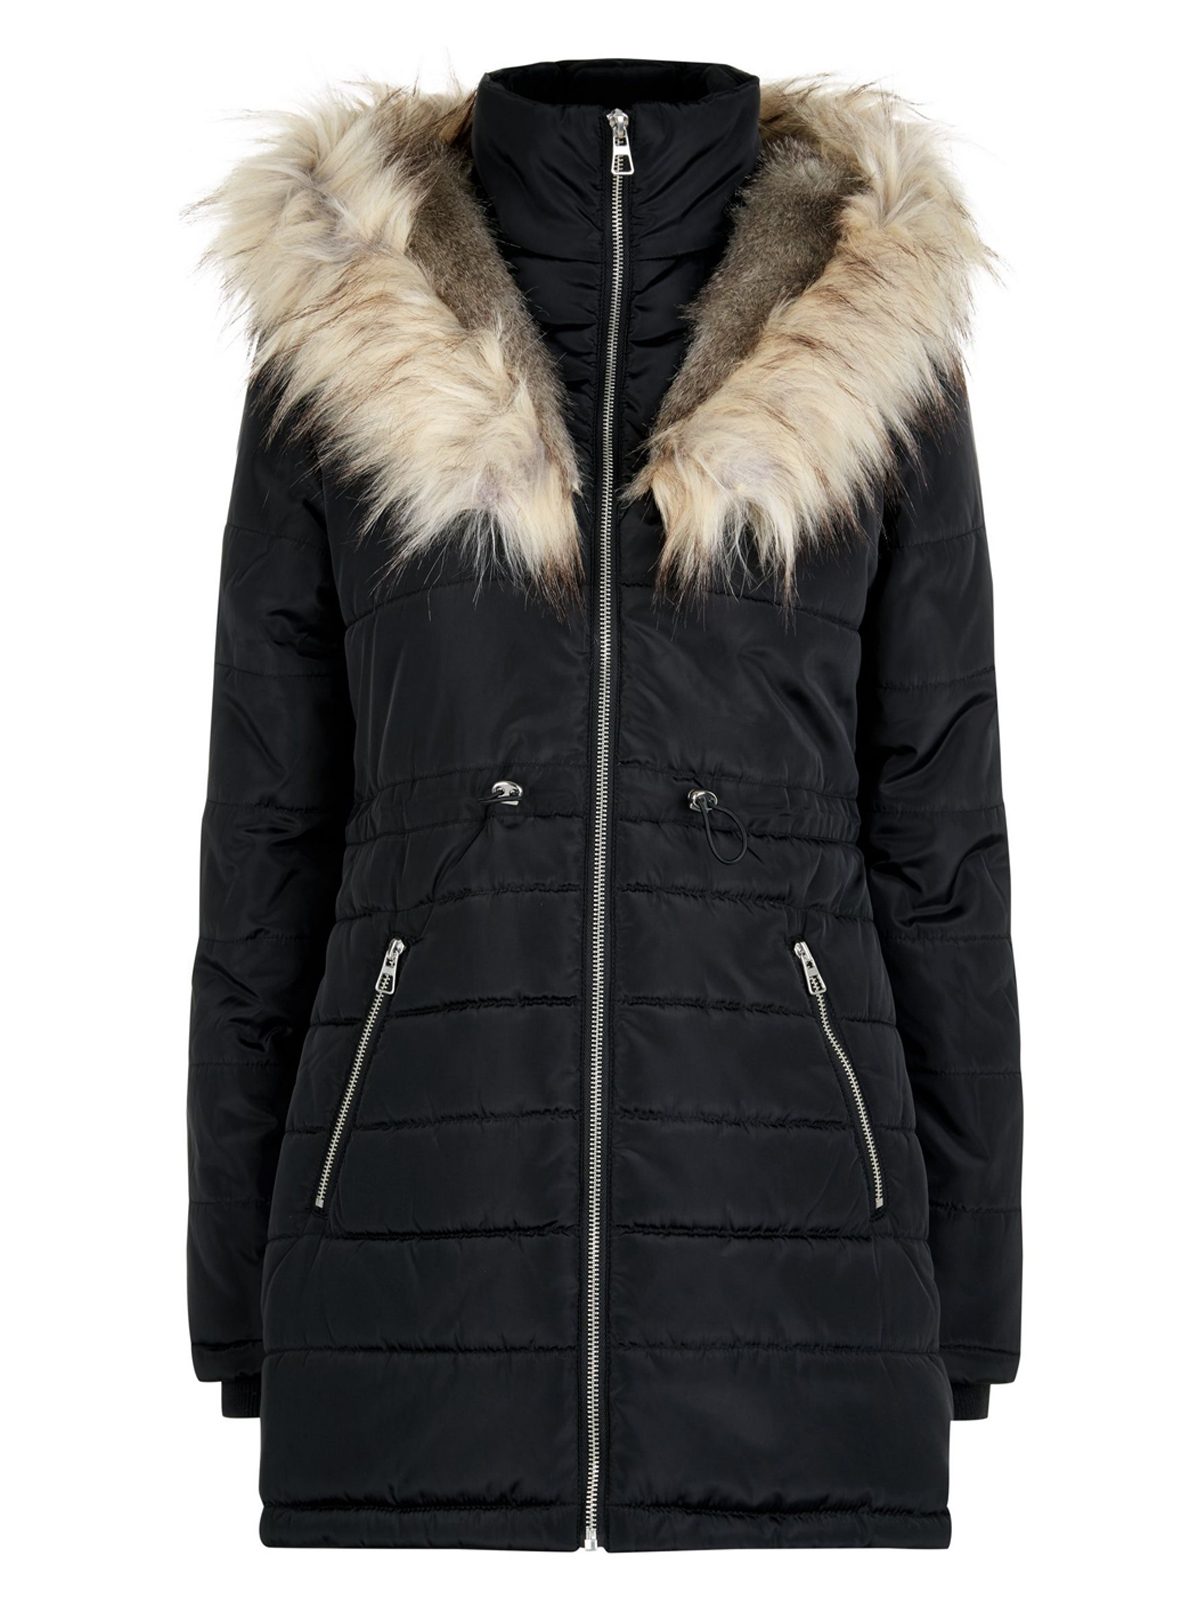 N3w L00k BLACK Hooded Faux Fur Trim Puffer Coat Jacket - Size 6 to 14